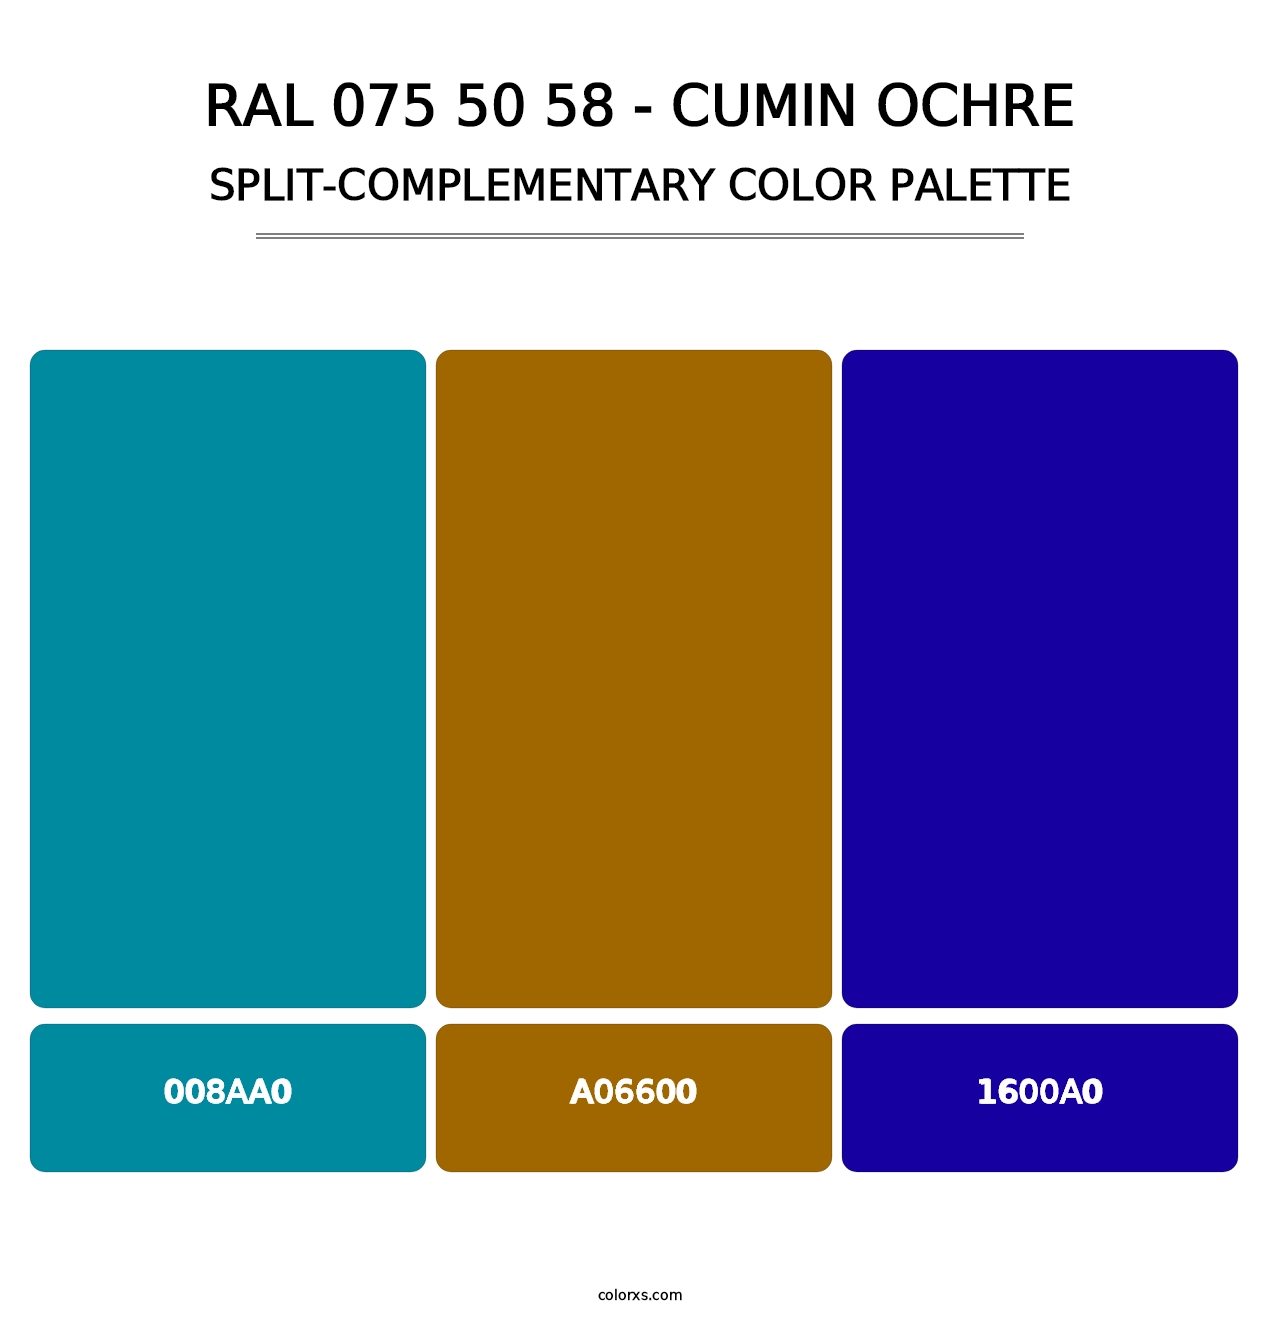 RAL 075 50 58 - Cumin Ochre - Split-Complementary Color Palette